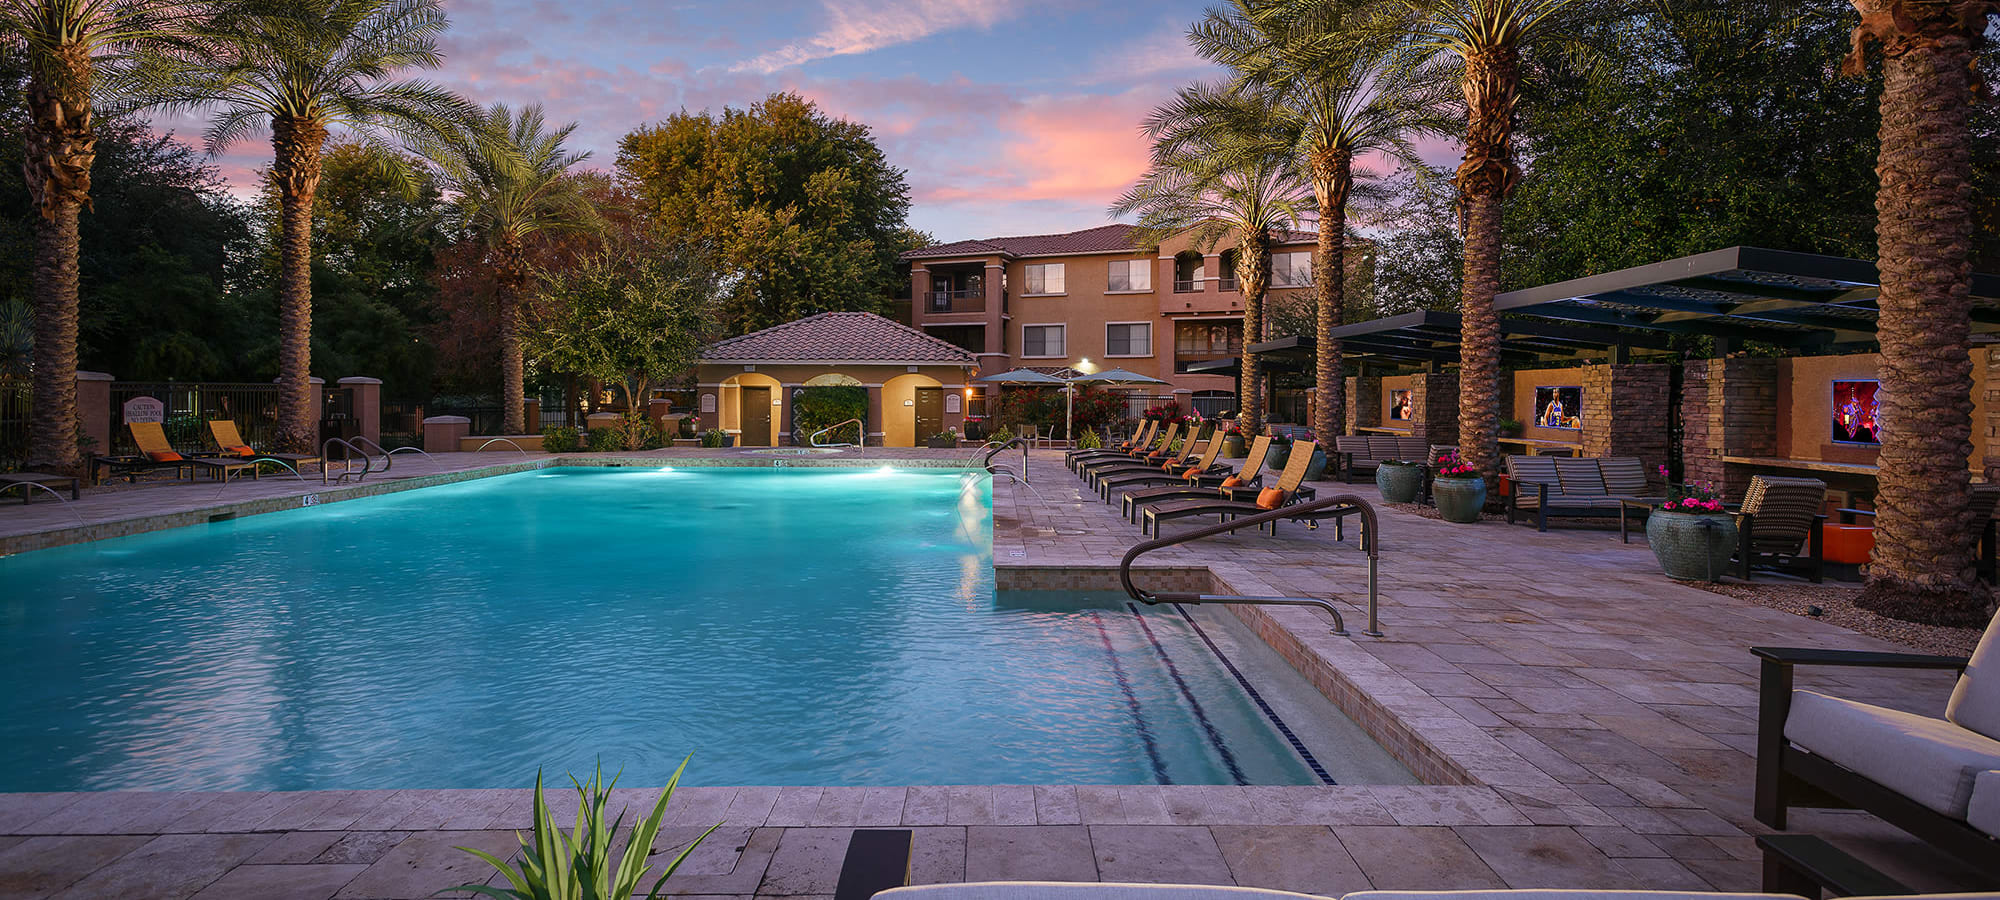 Resort-style pool at Stone Oaks in Chandler, Arizona